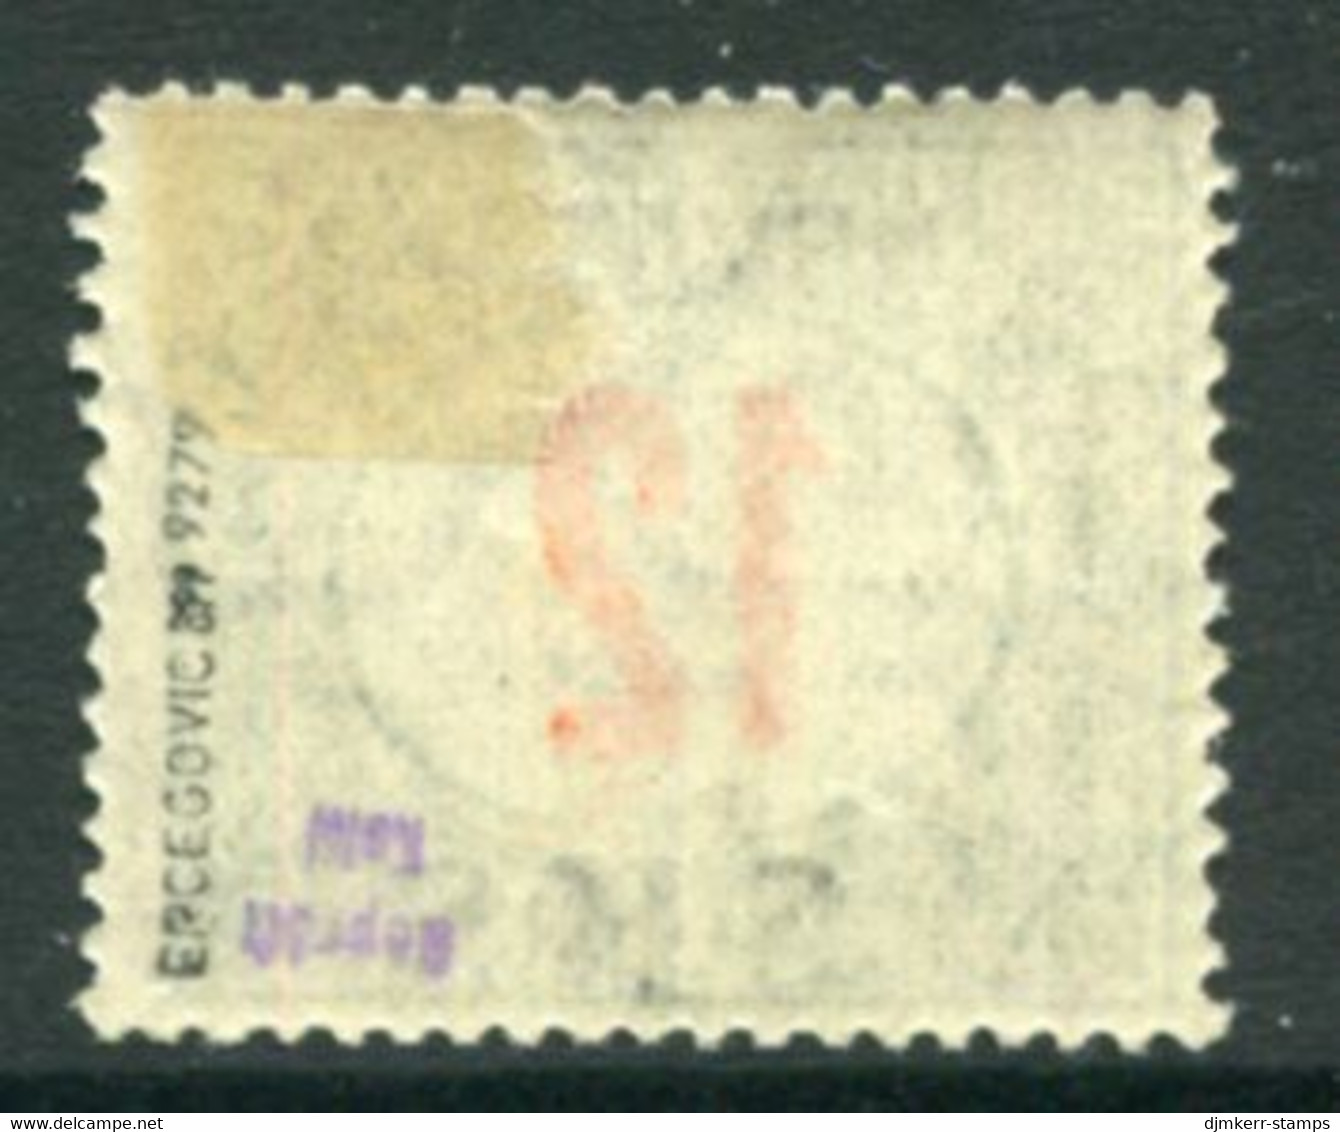 YUGOSLAVIA (SHS) 1918 Hungary Postage Due 12 F.. With Certificate  LHM / *.. Michel Porto 30 - Segnatasse